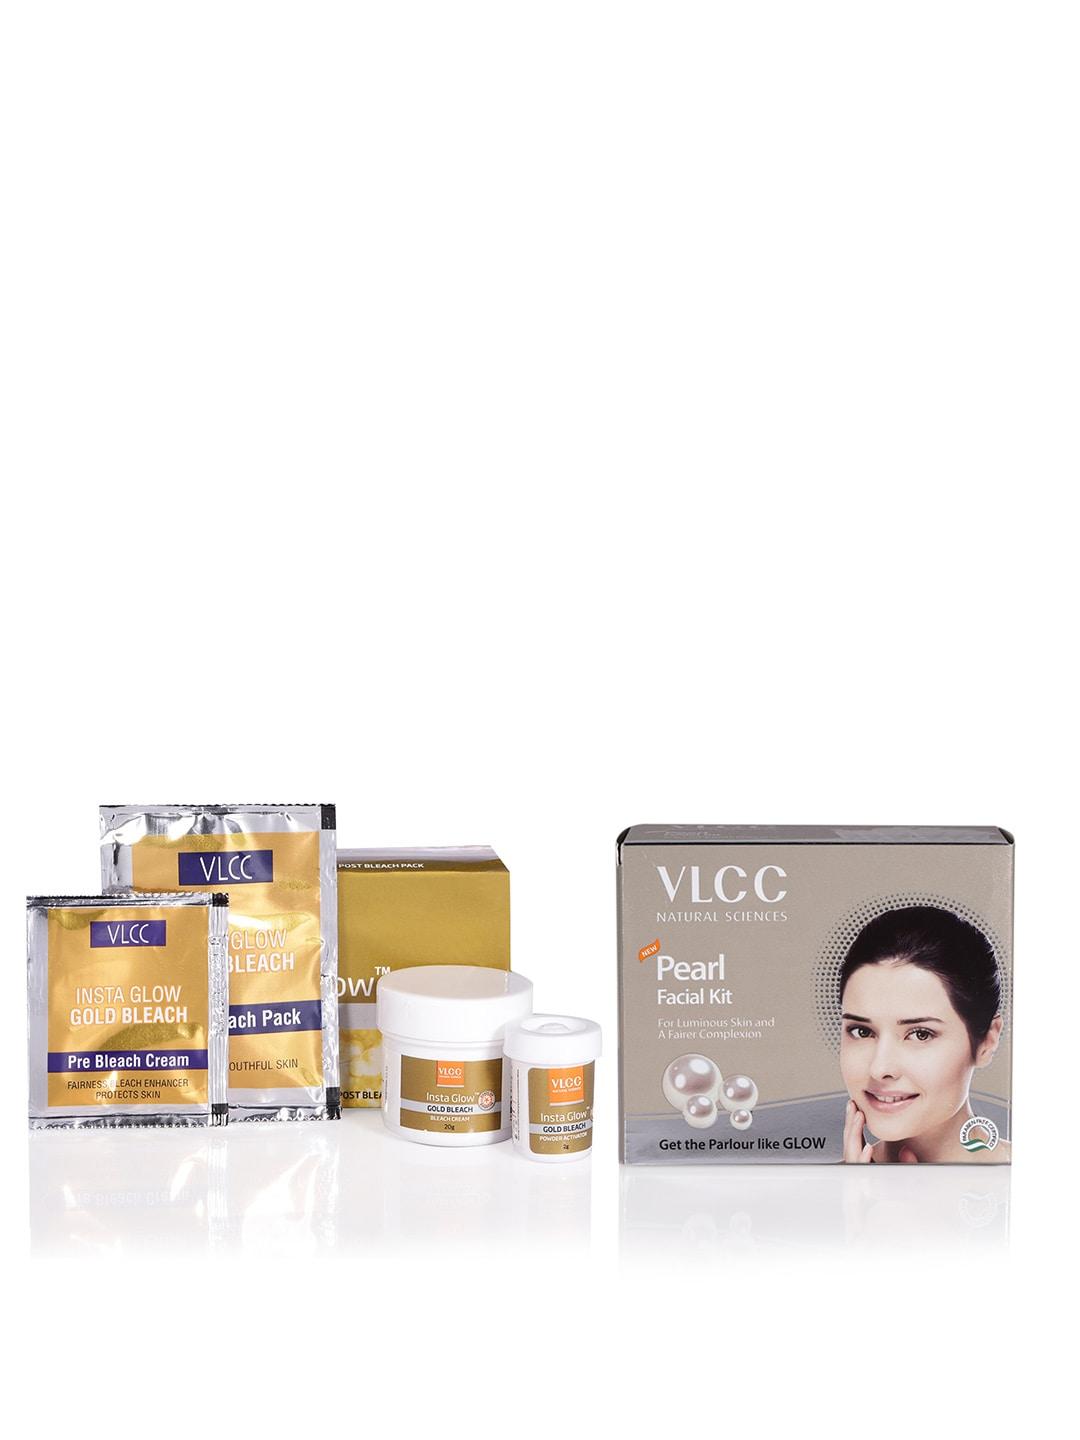 vlcc-set-of-pearl-facial-kit---60-g-&-insta-glow-gold-bleach---30-g